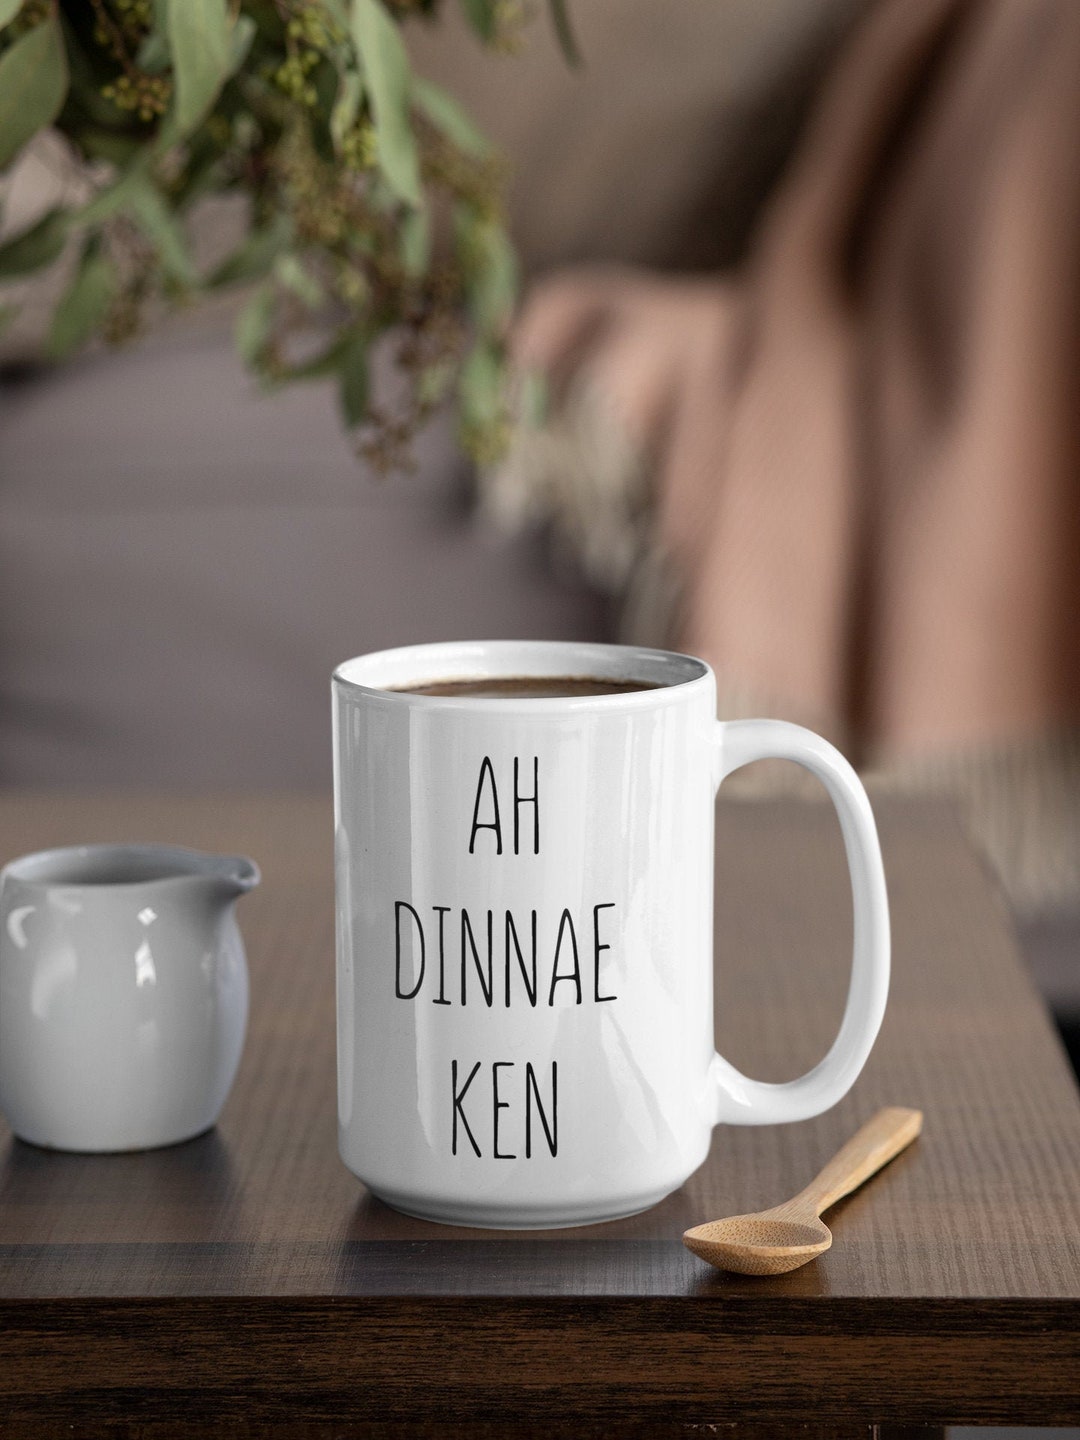 Ah Dinnae Ken, Scotland Sayings Mug Gift, Coffee Lover Gift, Scotland ...